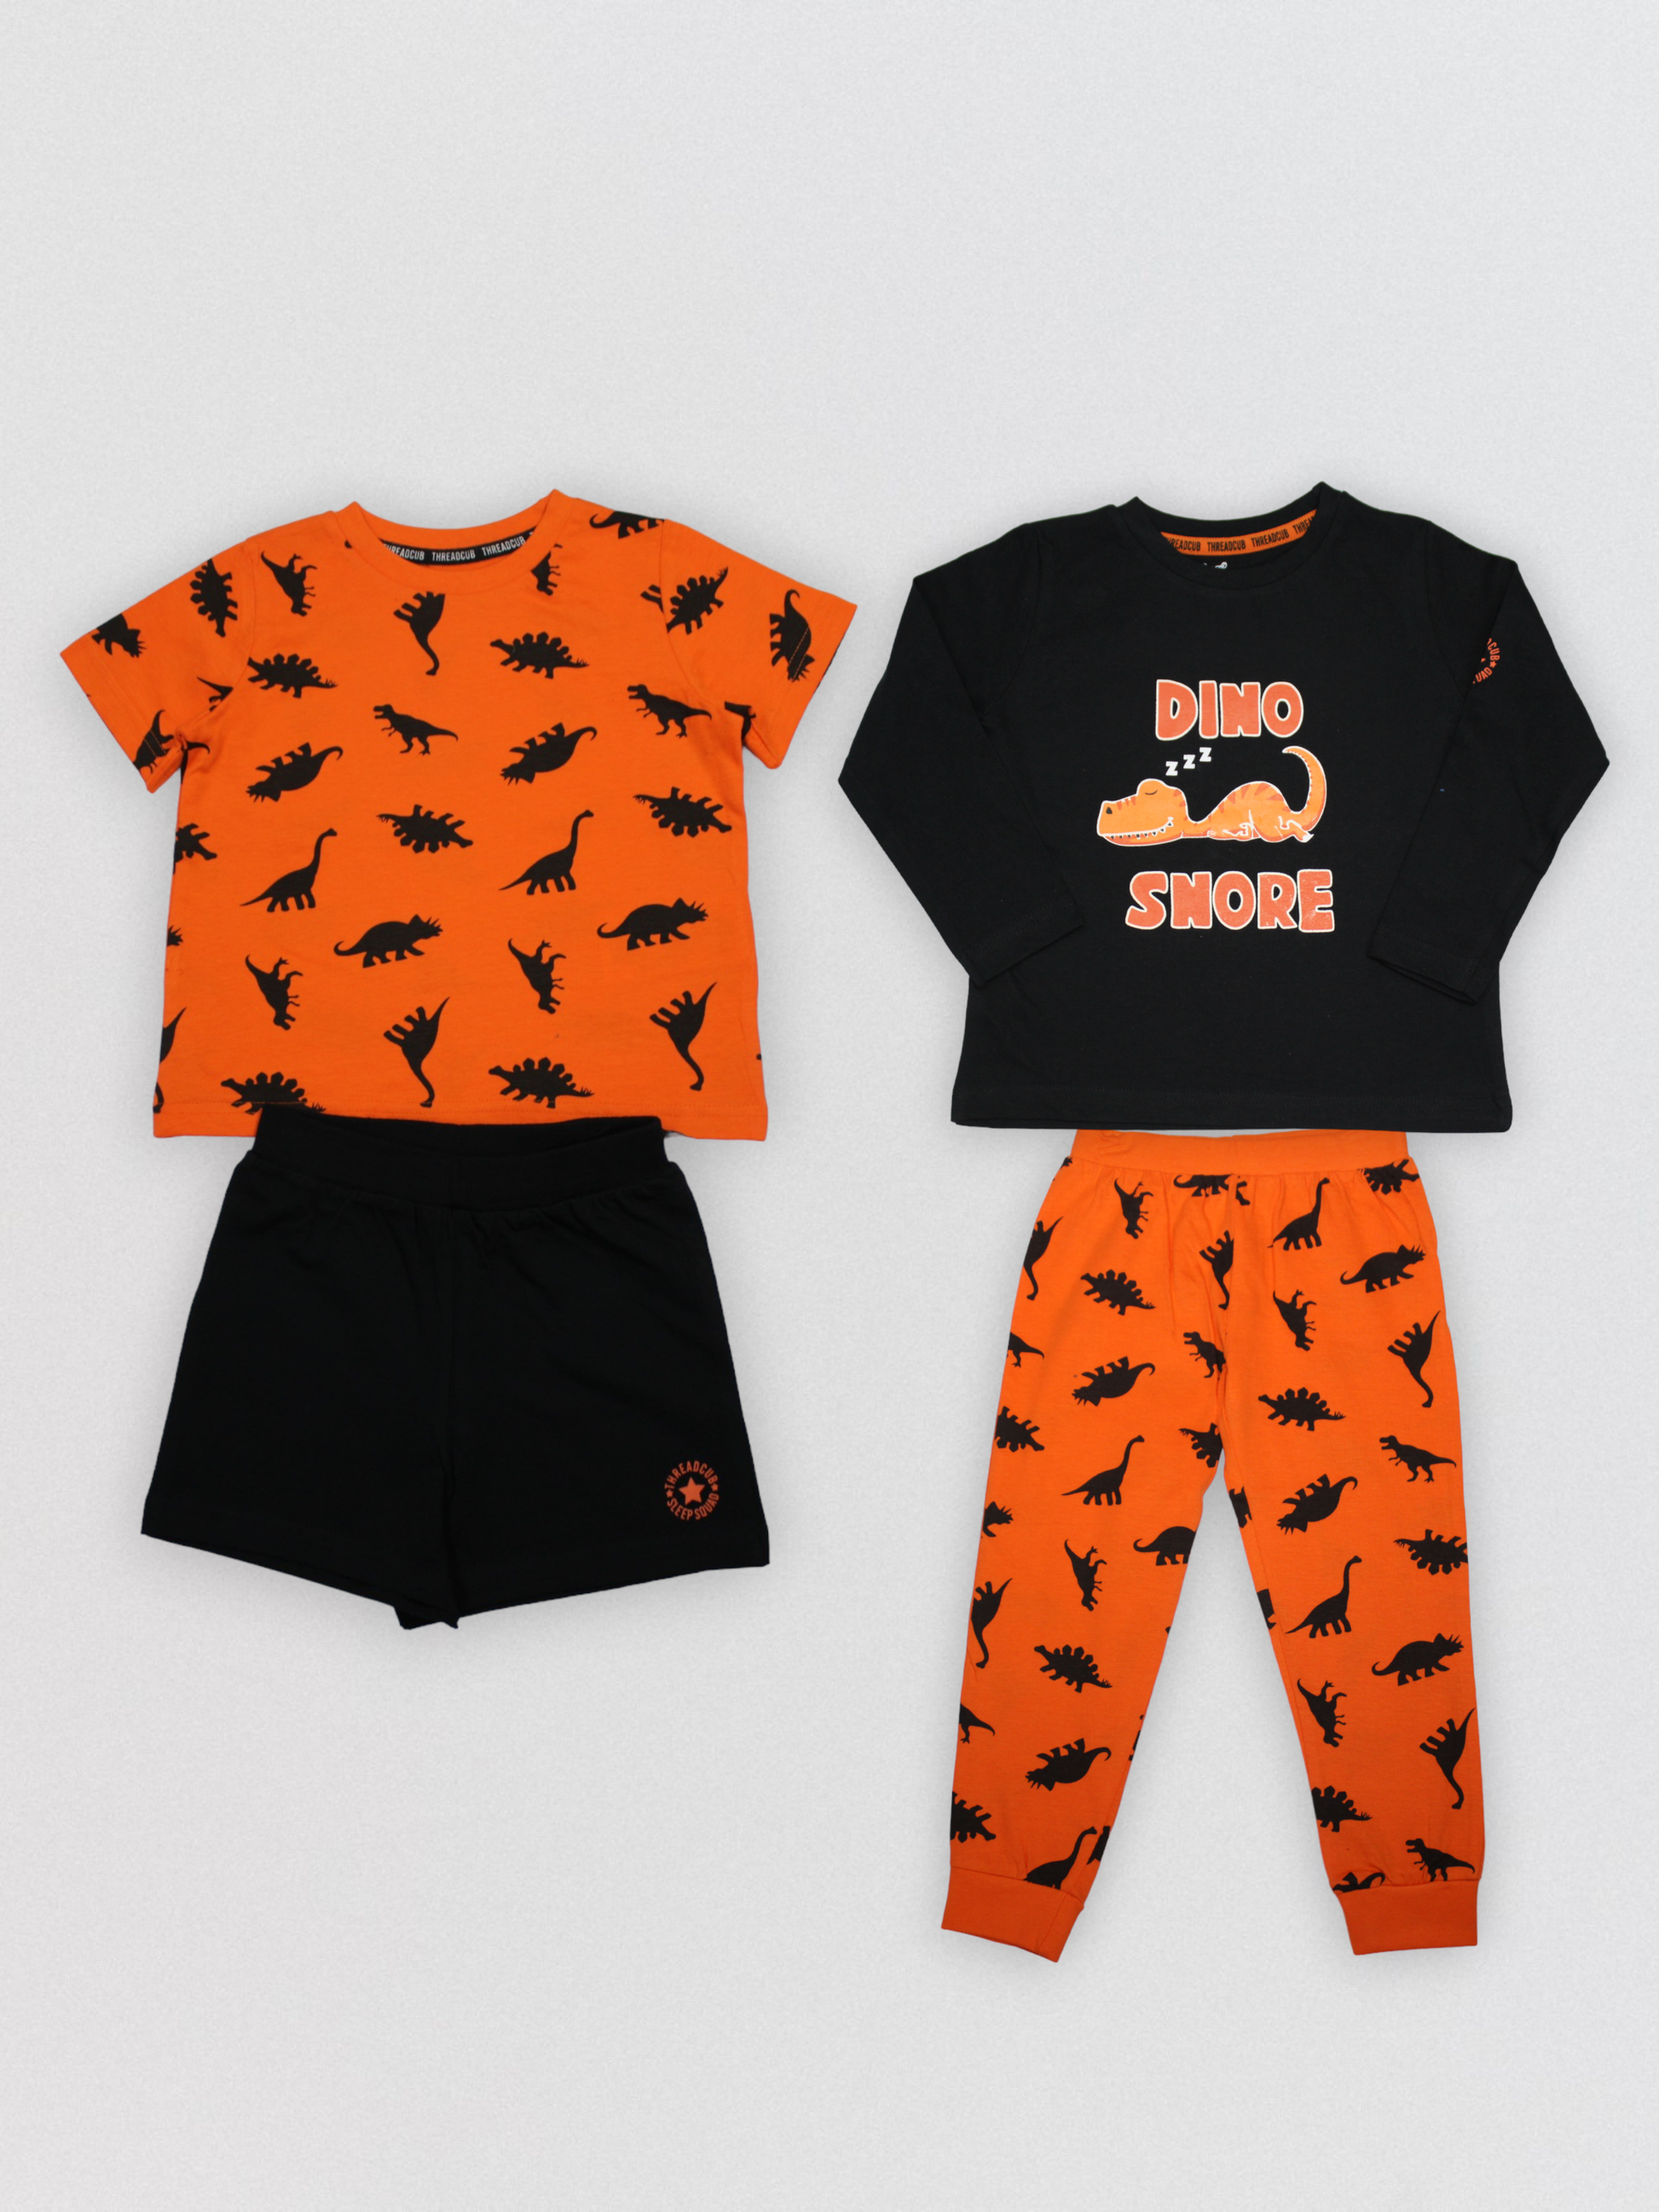 Snore - Kids Pyjama Set Value Pack. ( Pack of 2 )